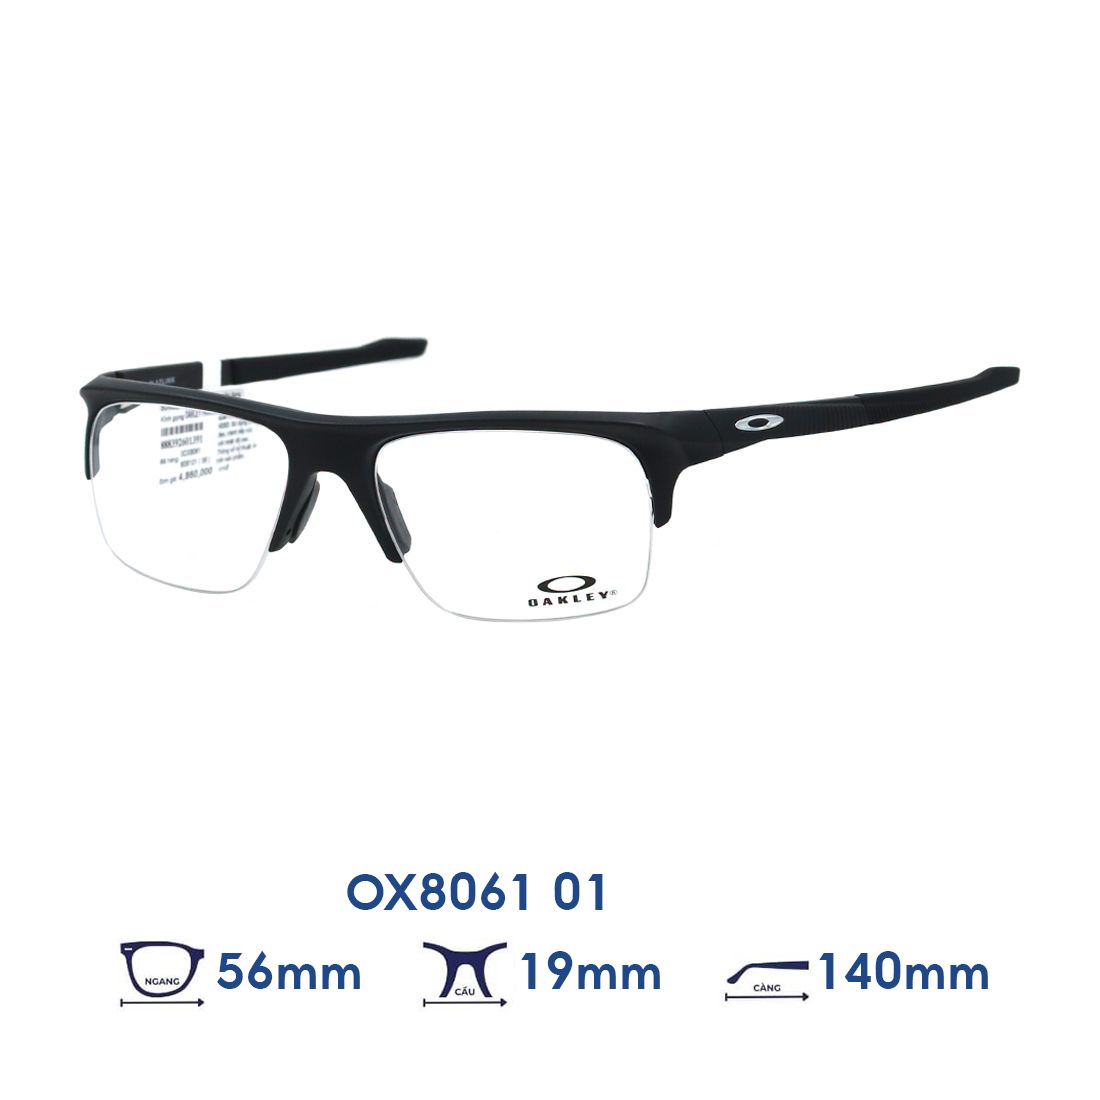  Gọng kính OAKLEY OX8061 01 